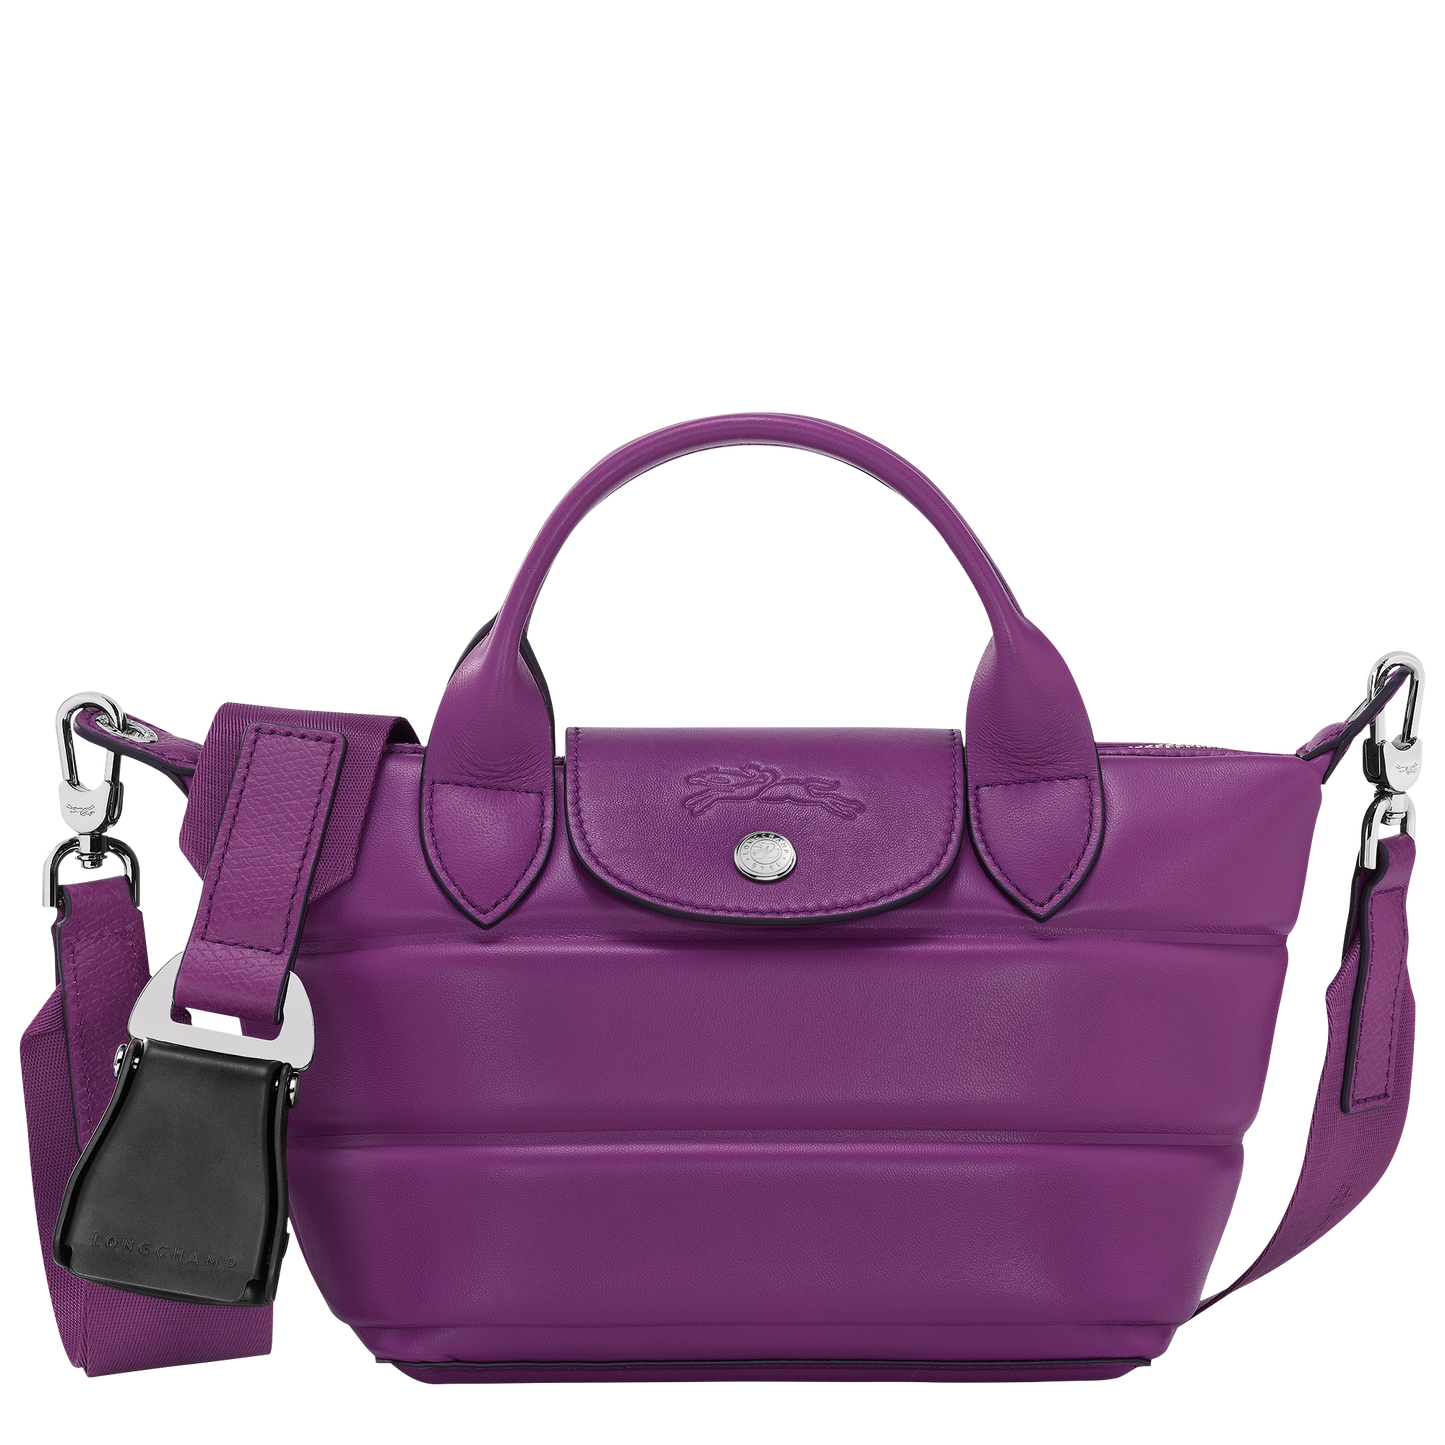 Le Pliage Xtra Handbag XS